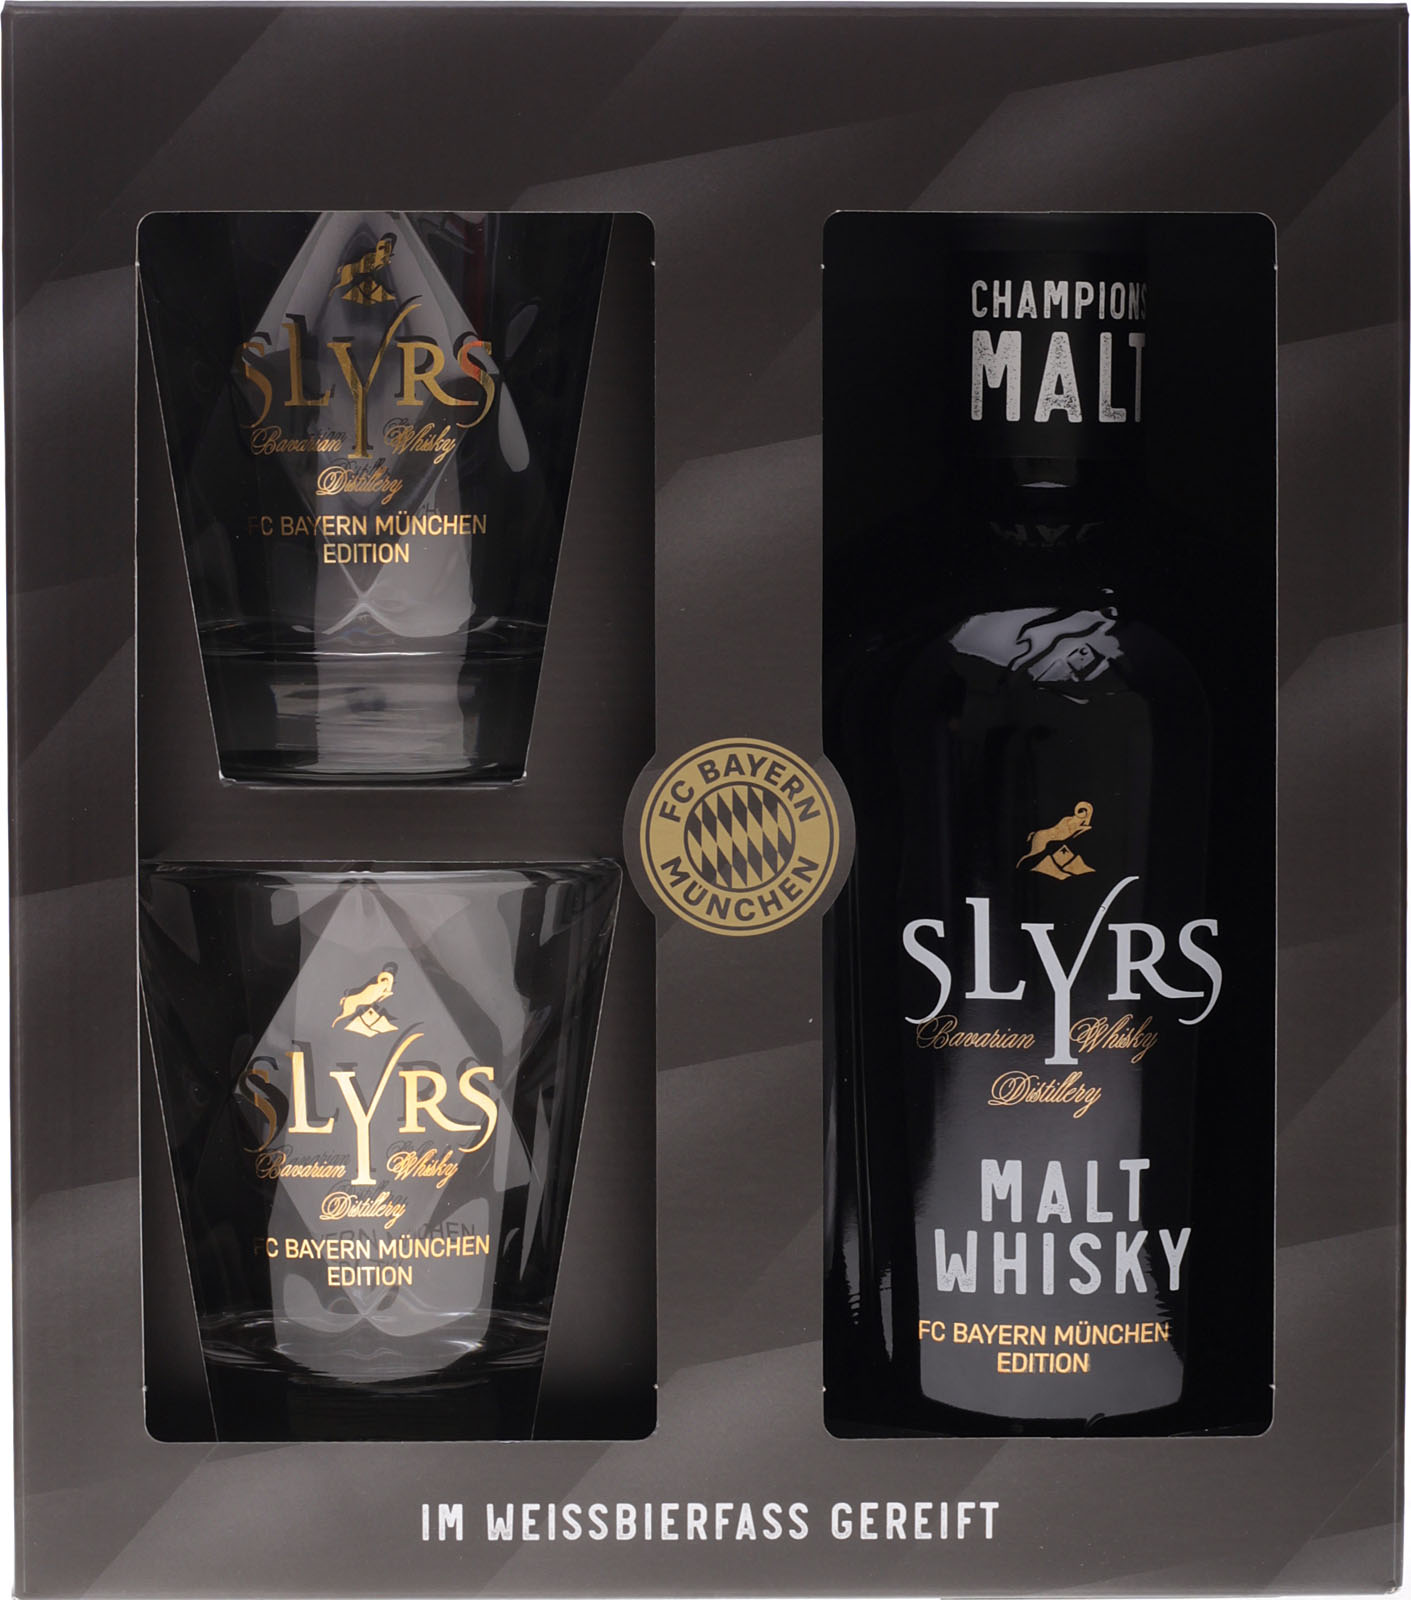 slyrs champions malt whisky fc bayern münchen edition